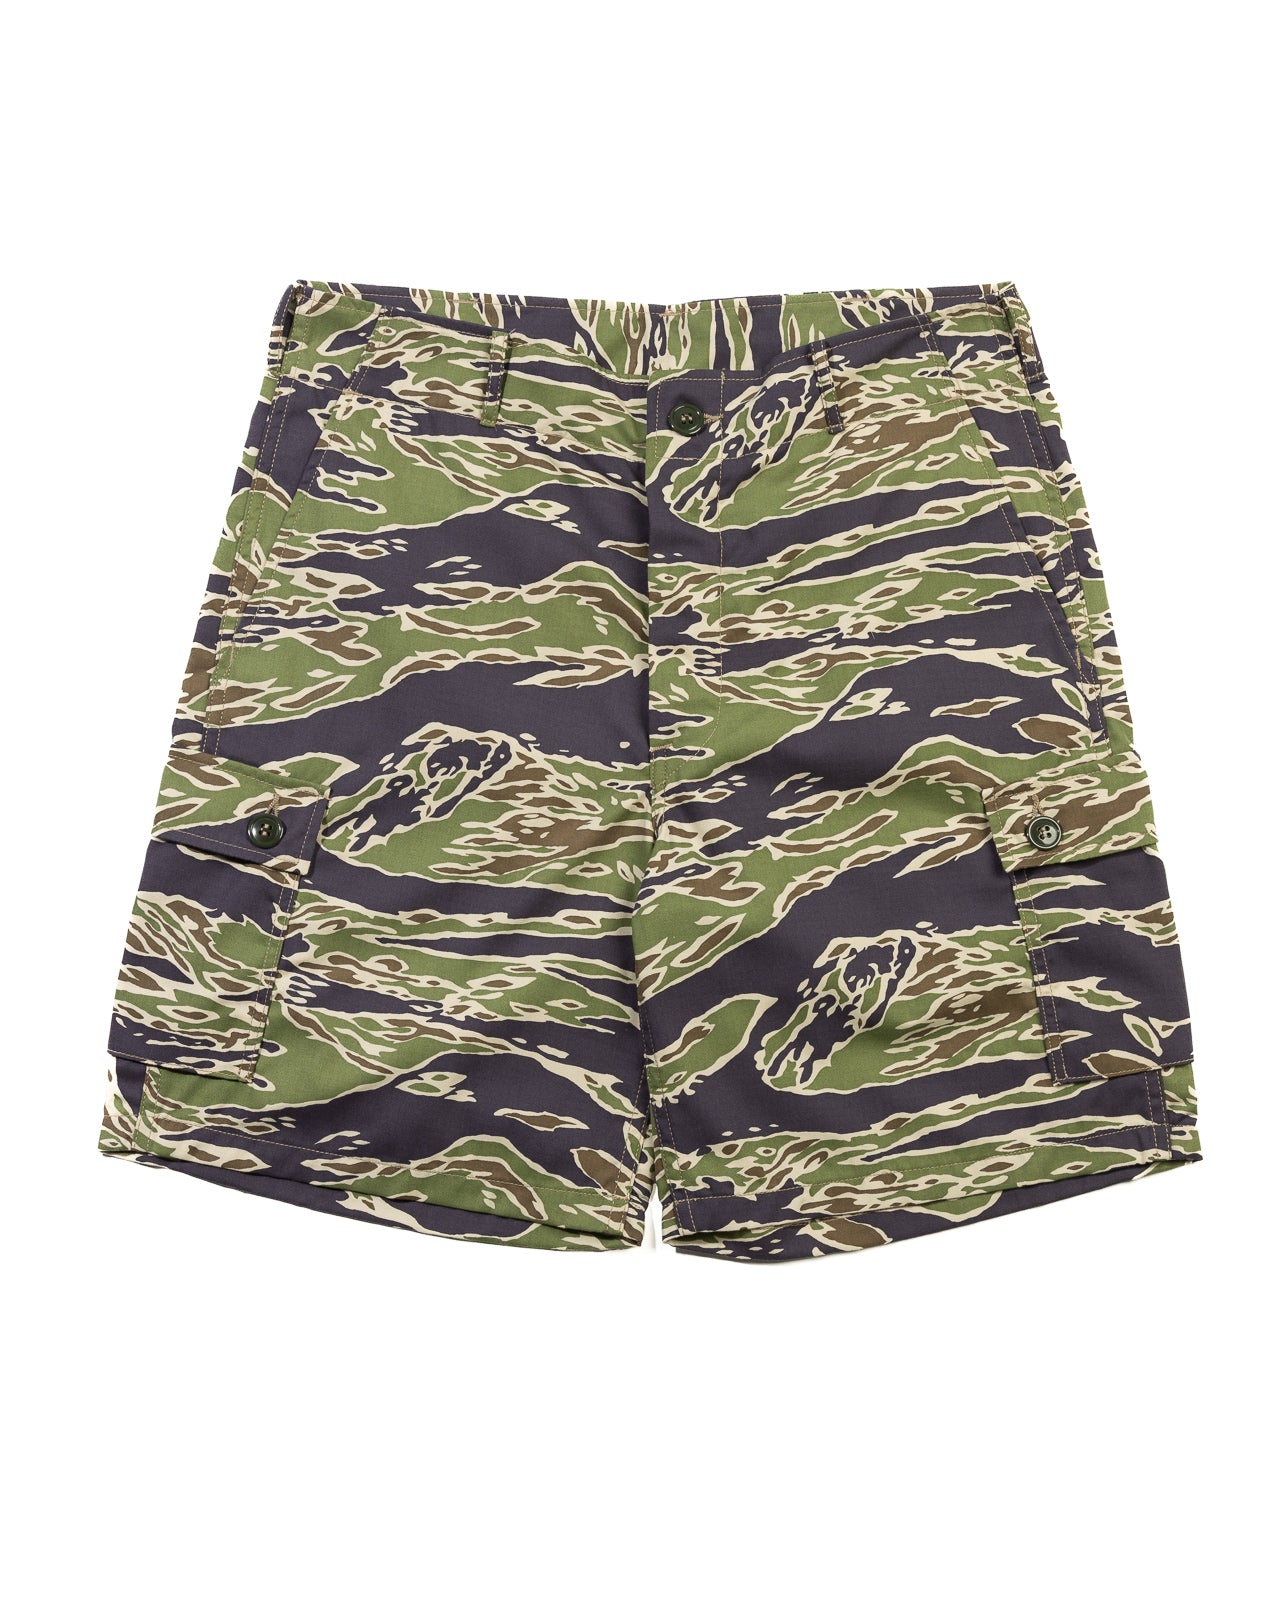 Tiger Camouflage Civilian Shorts - Late War Green